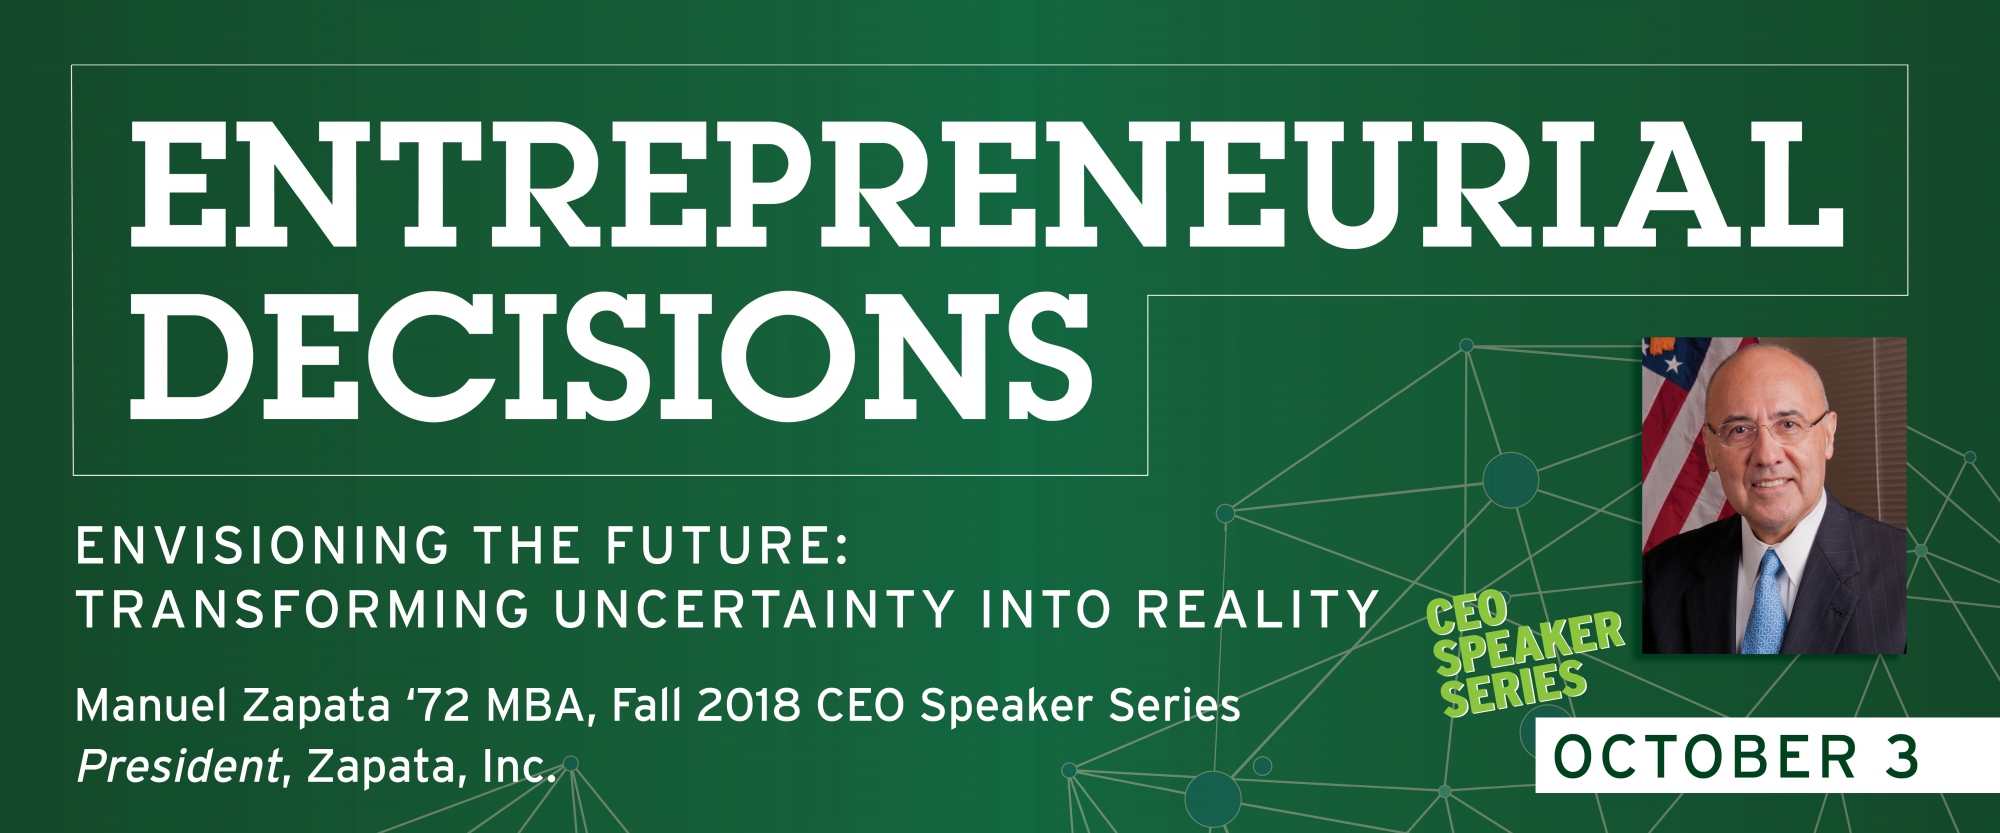 Entrepreneurial Decisions Series / CEO Speaker Series / October 3